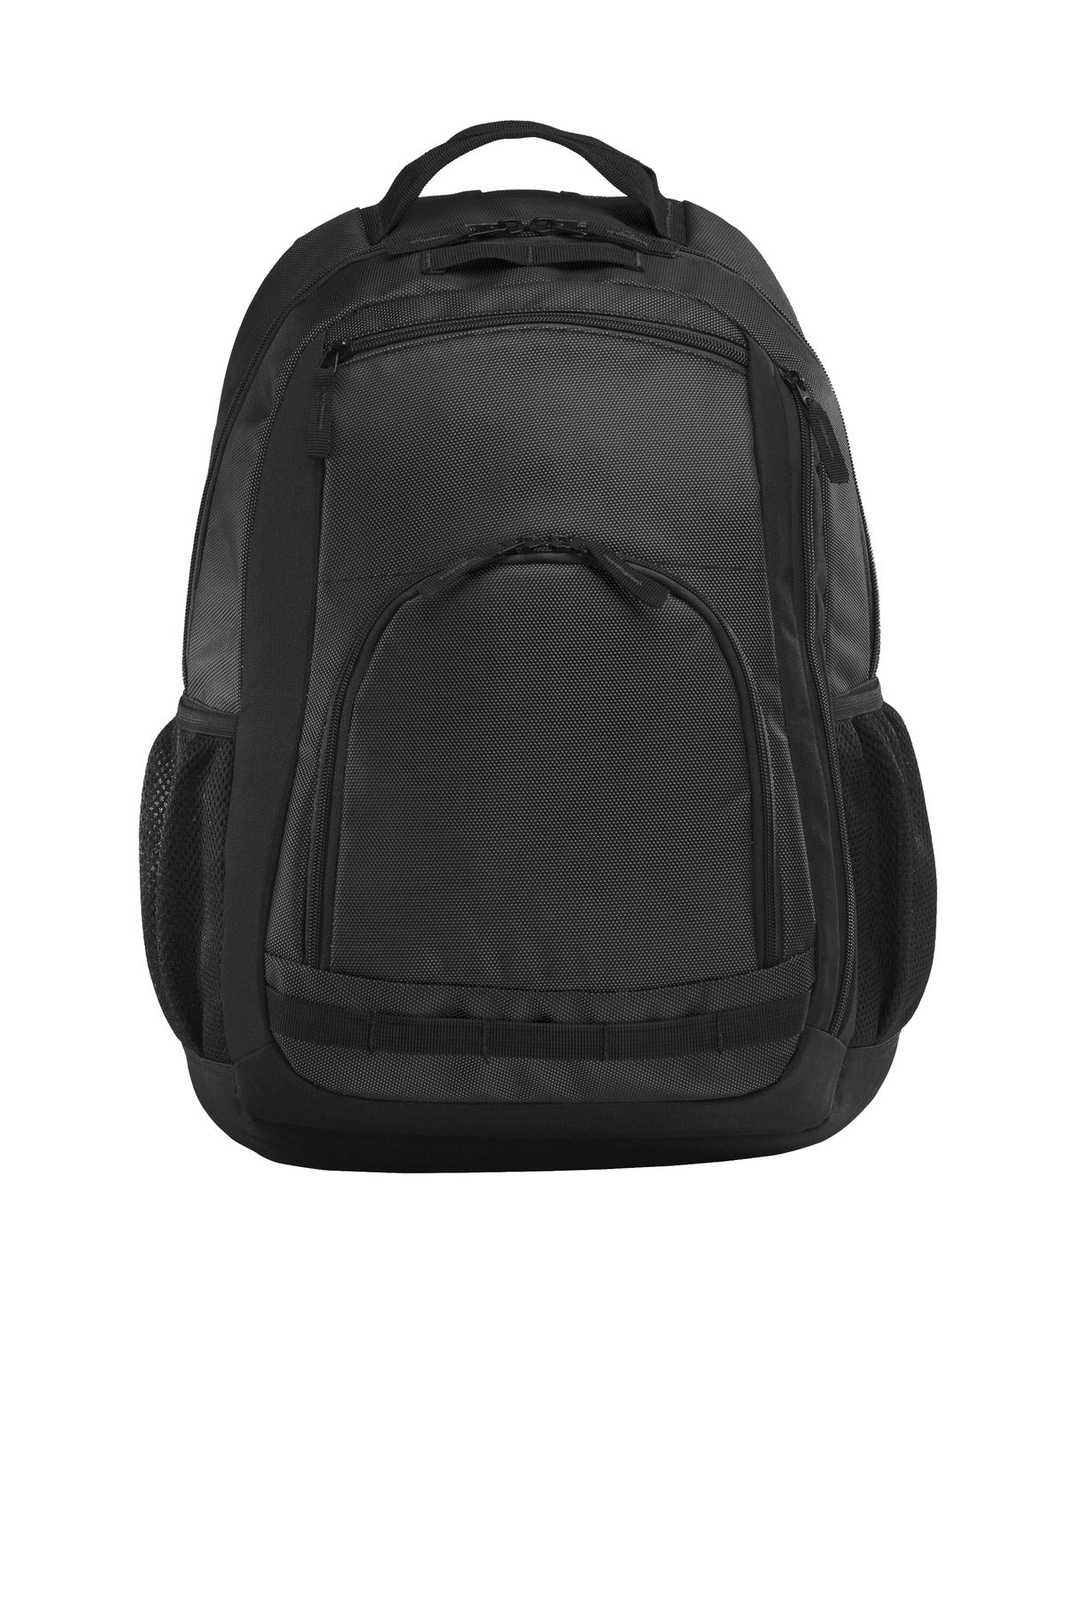 Port Authority BG207 Xtreme Backpack - Dark Gray Black Black - HIT a Double - 1